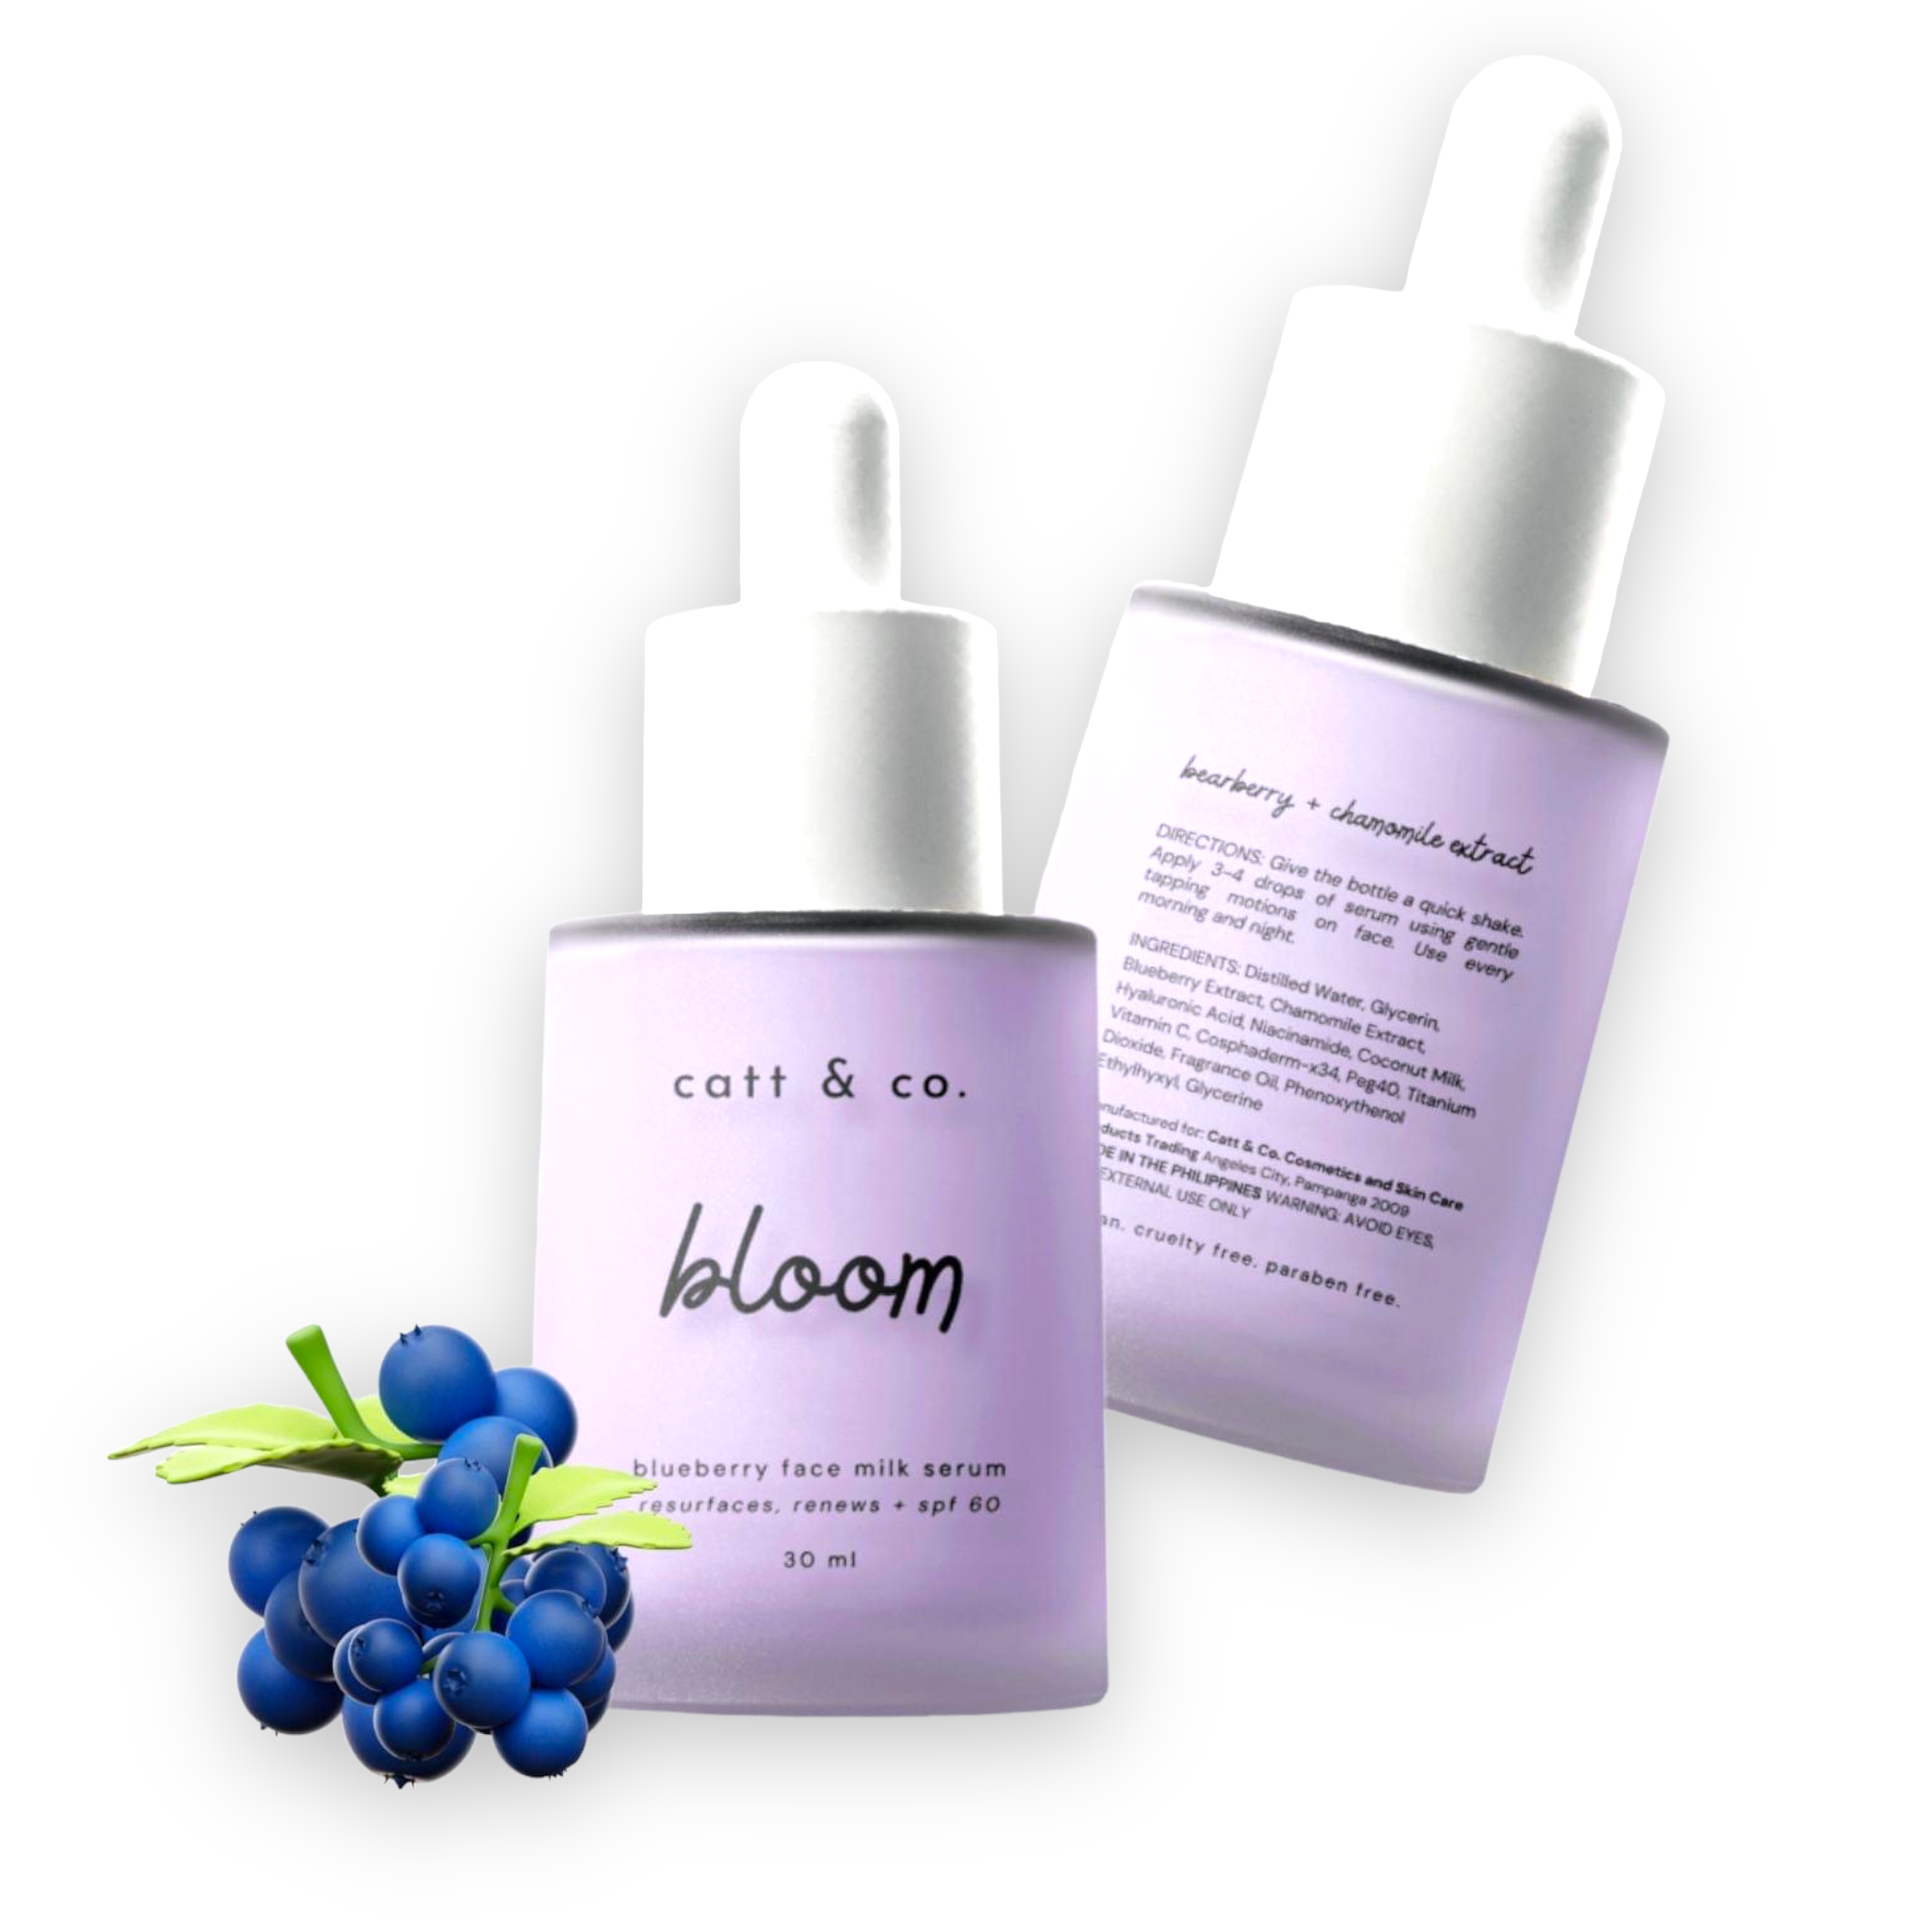 Catt & Co - BLOOM - Blueberry Face Milk Serum | Resurfaces Renews - SPF 60 - 30ml